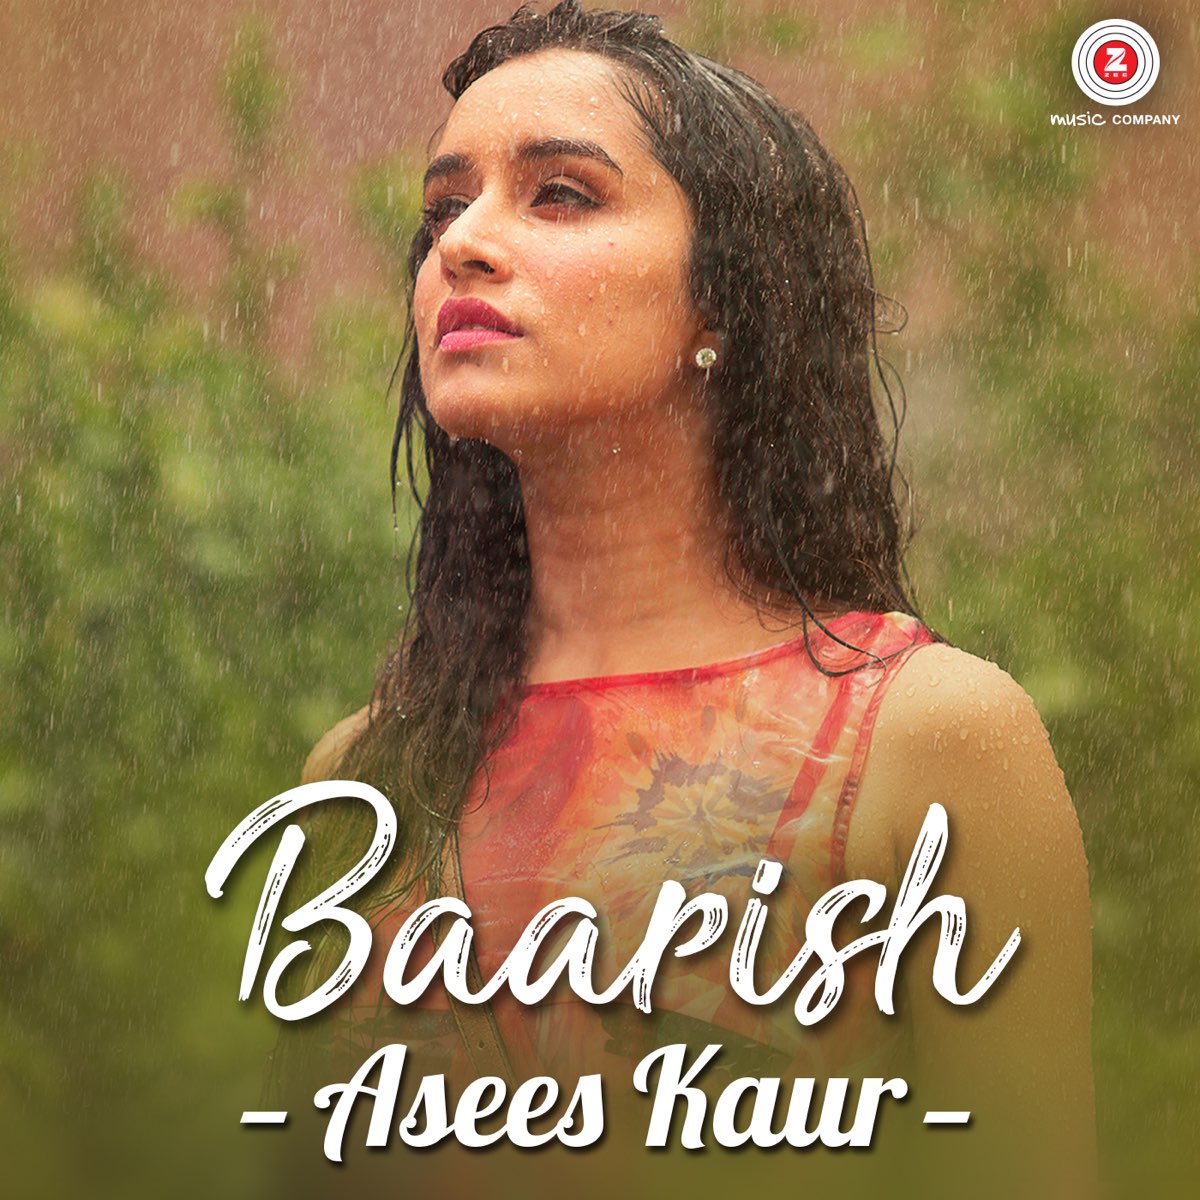 Baarish - Asees Kaur - Single by Tanishk Bagchi on Apple Music